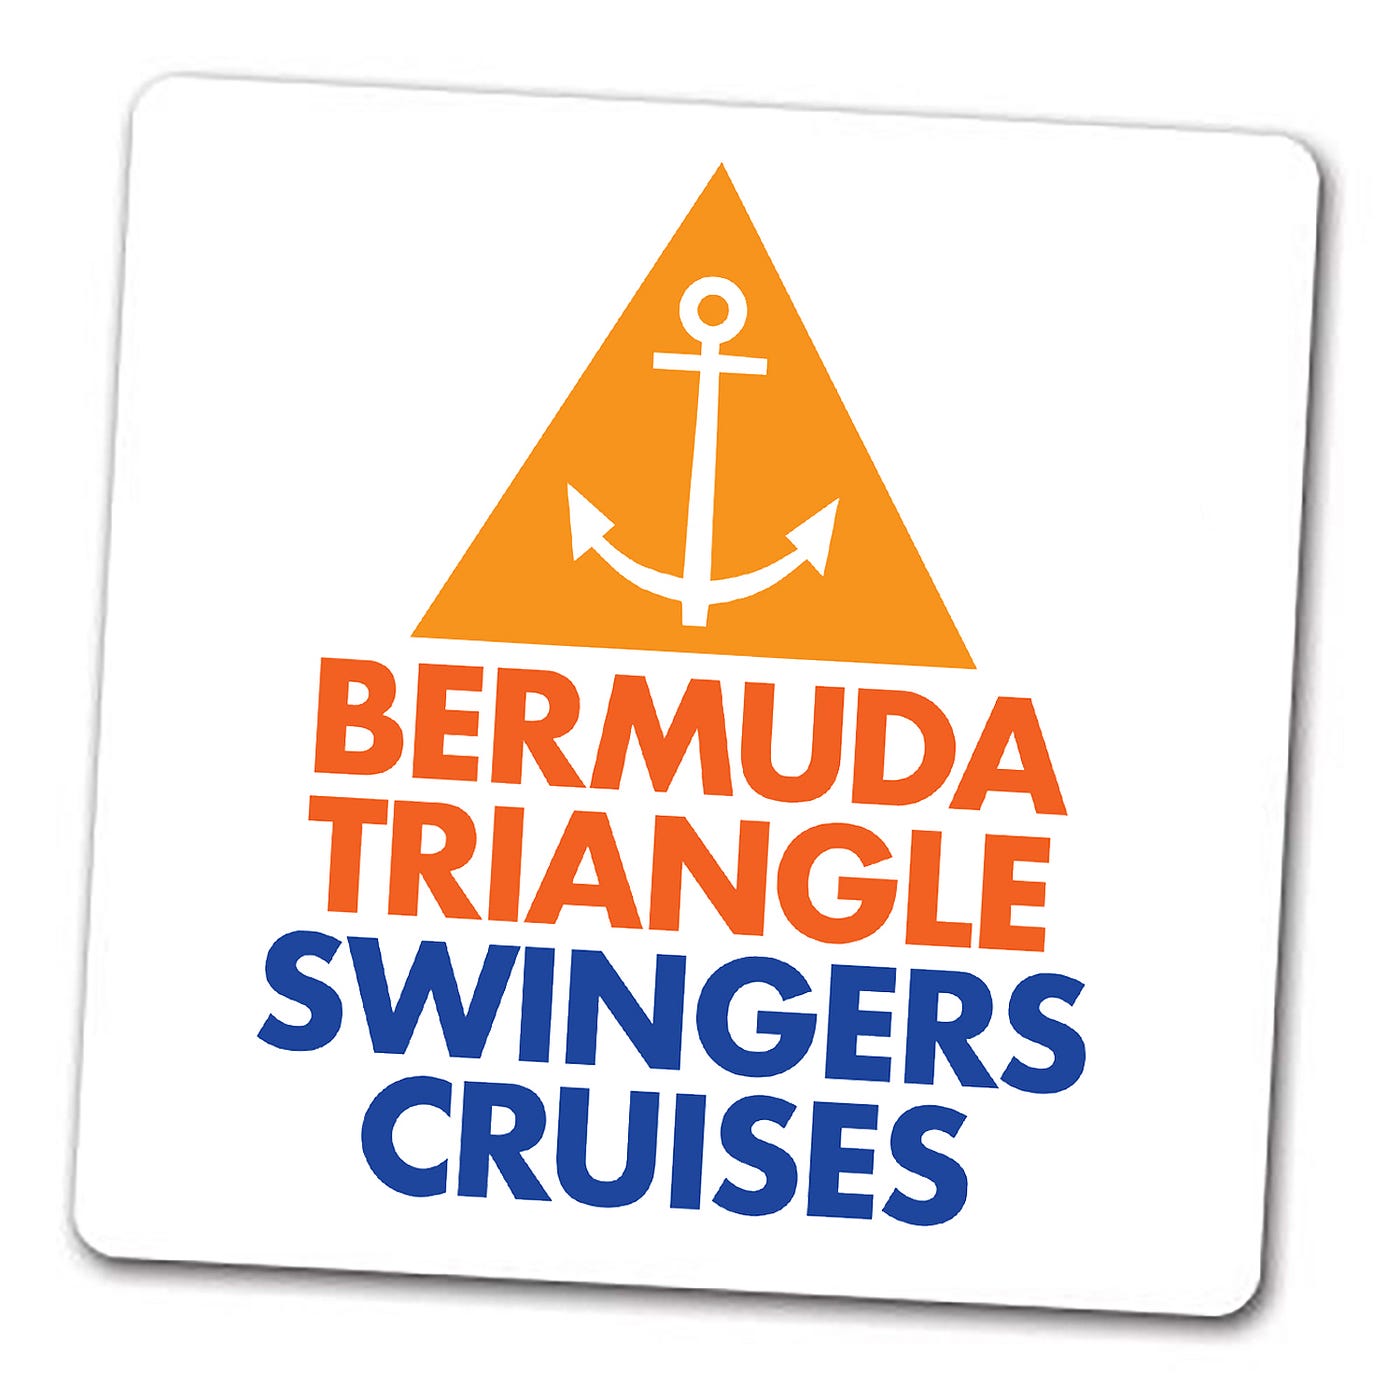 NYC Liminal Salon 10 Bermuda Triangle Swingers Cruises 1978 Voyage by No Proscenium No Proscenium